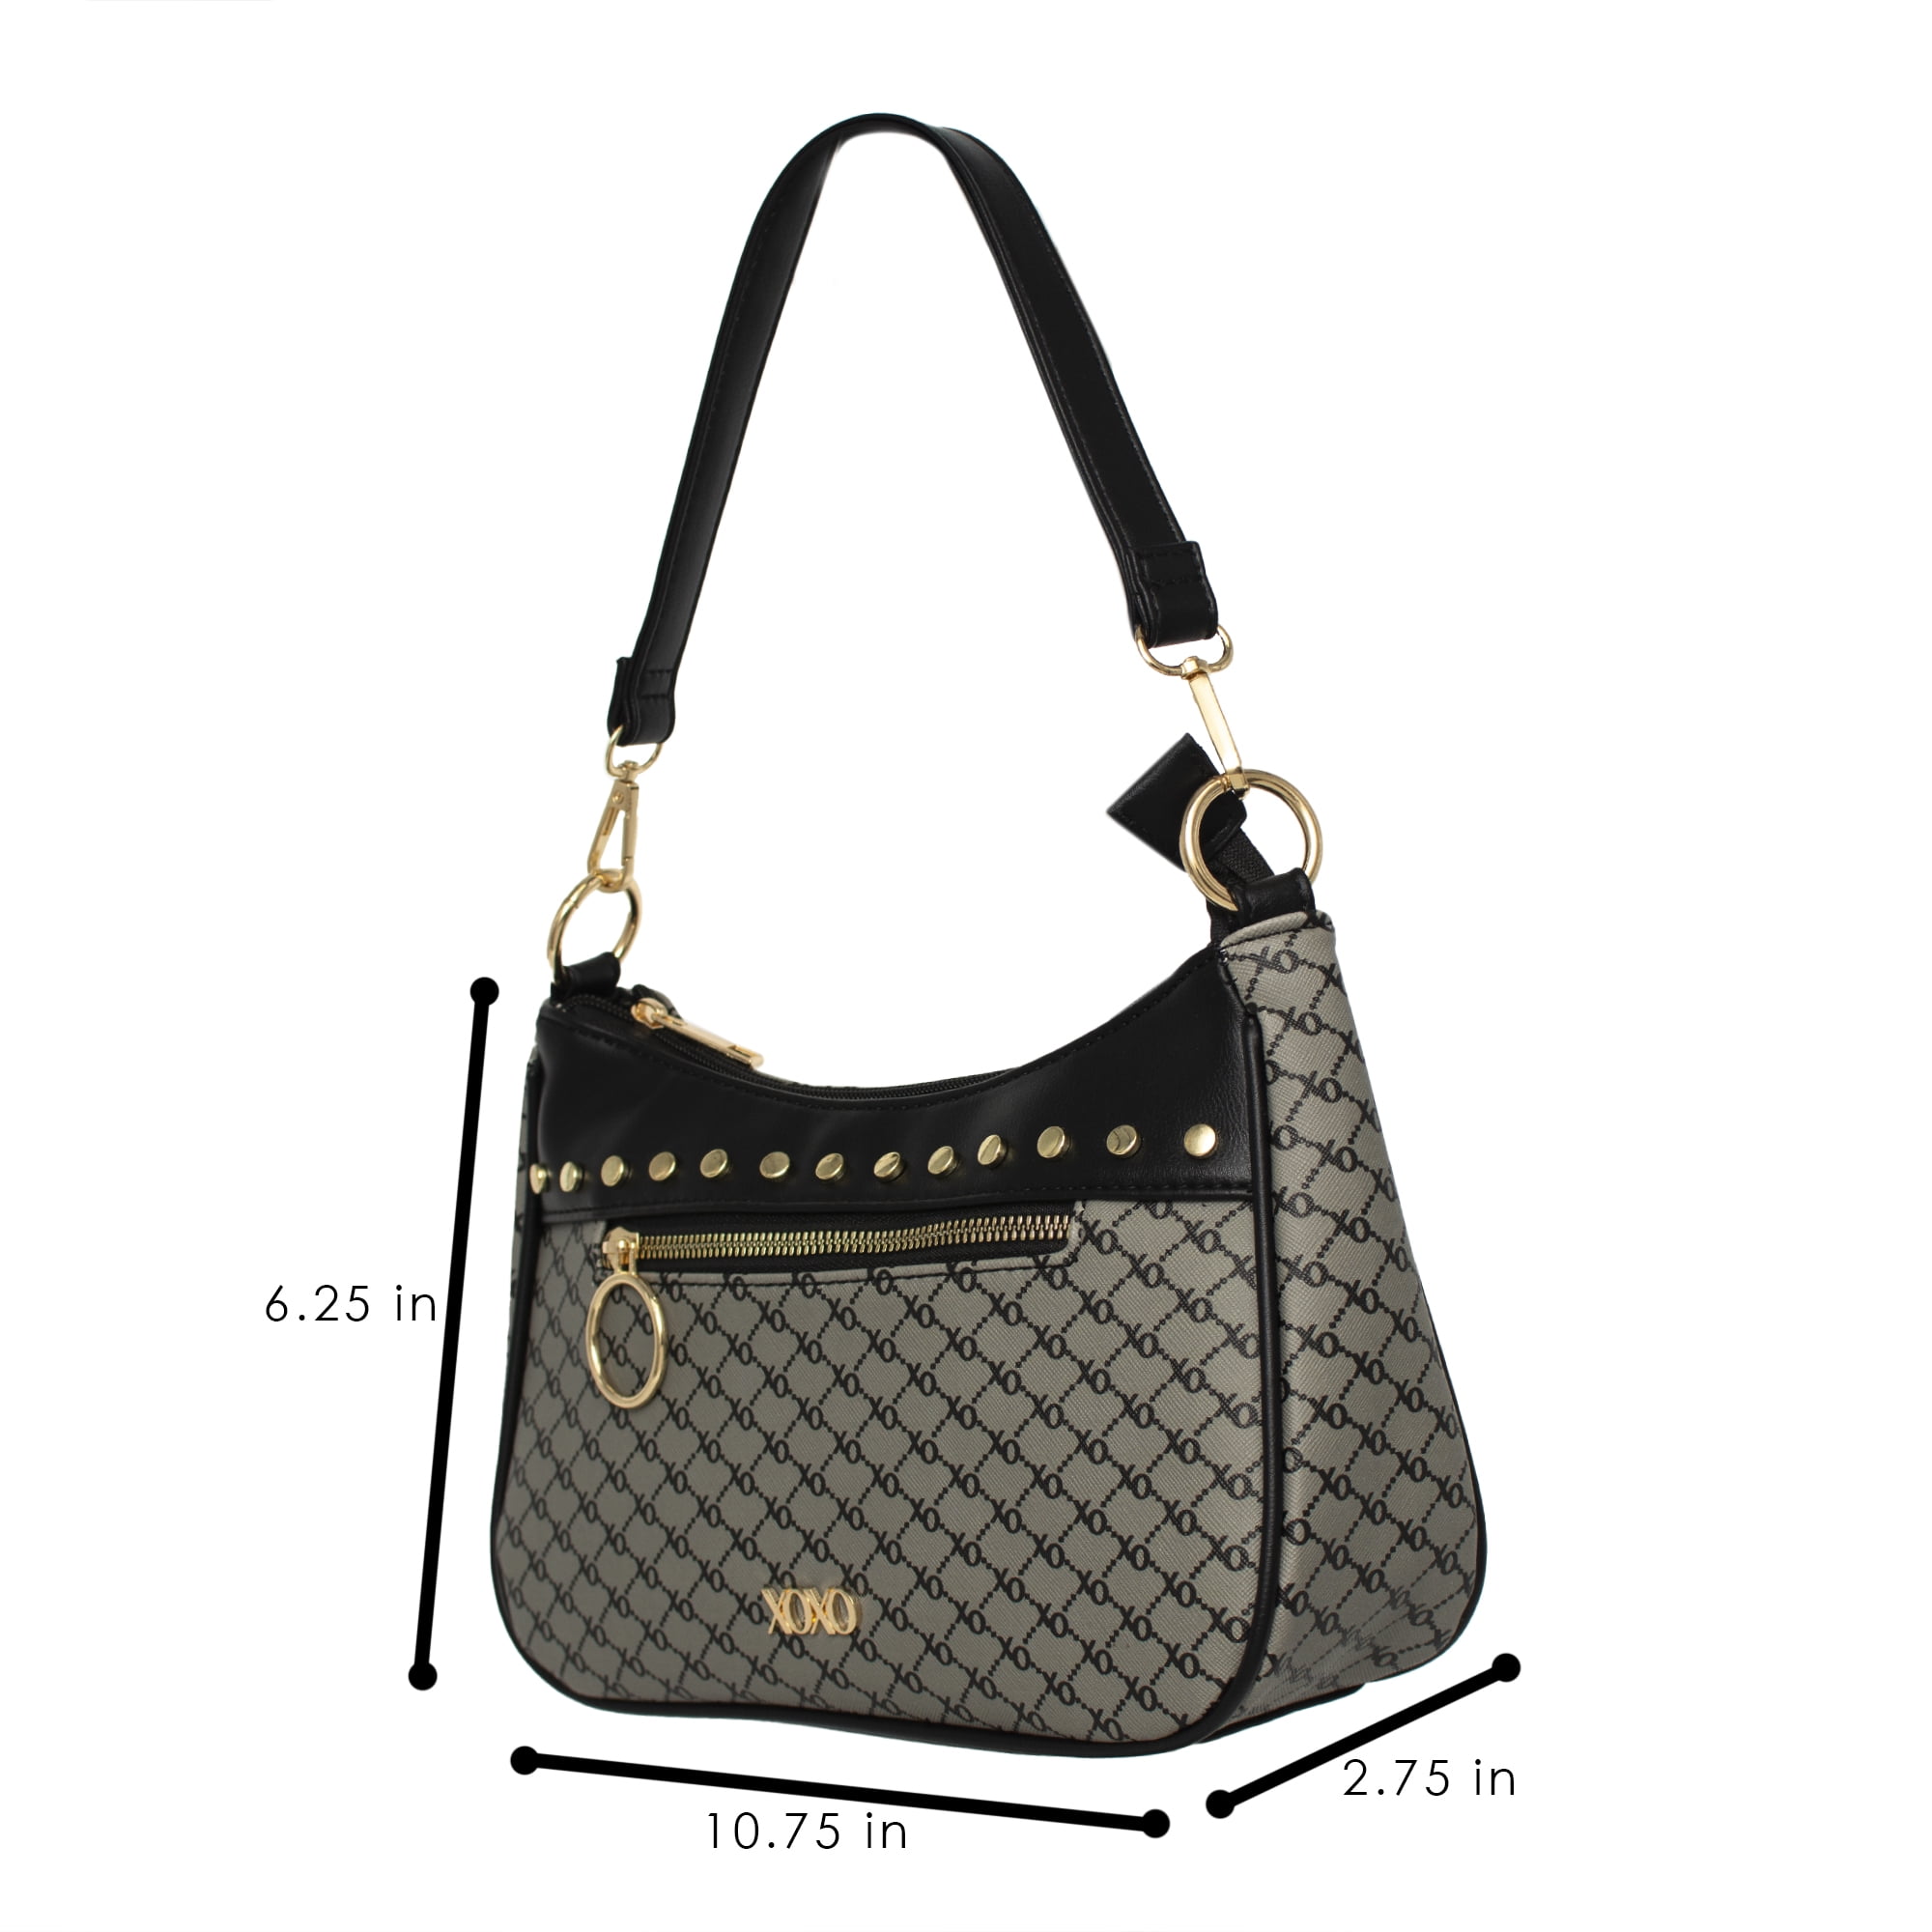 XOXO Purse Black Handbag Faux Leather Zip Colorful New | eBay